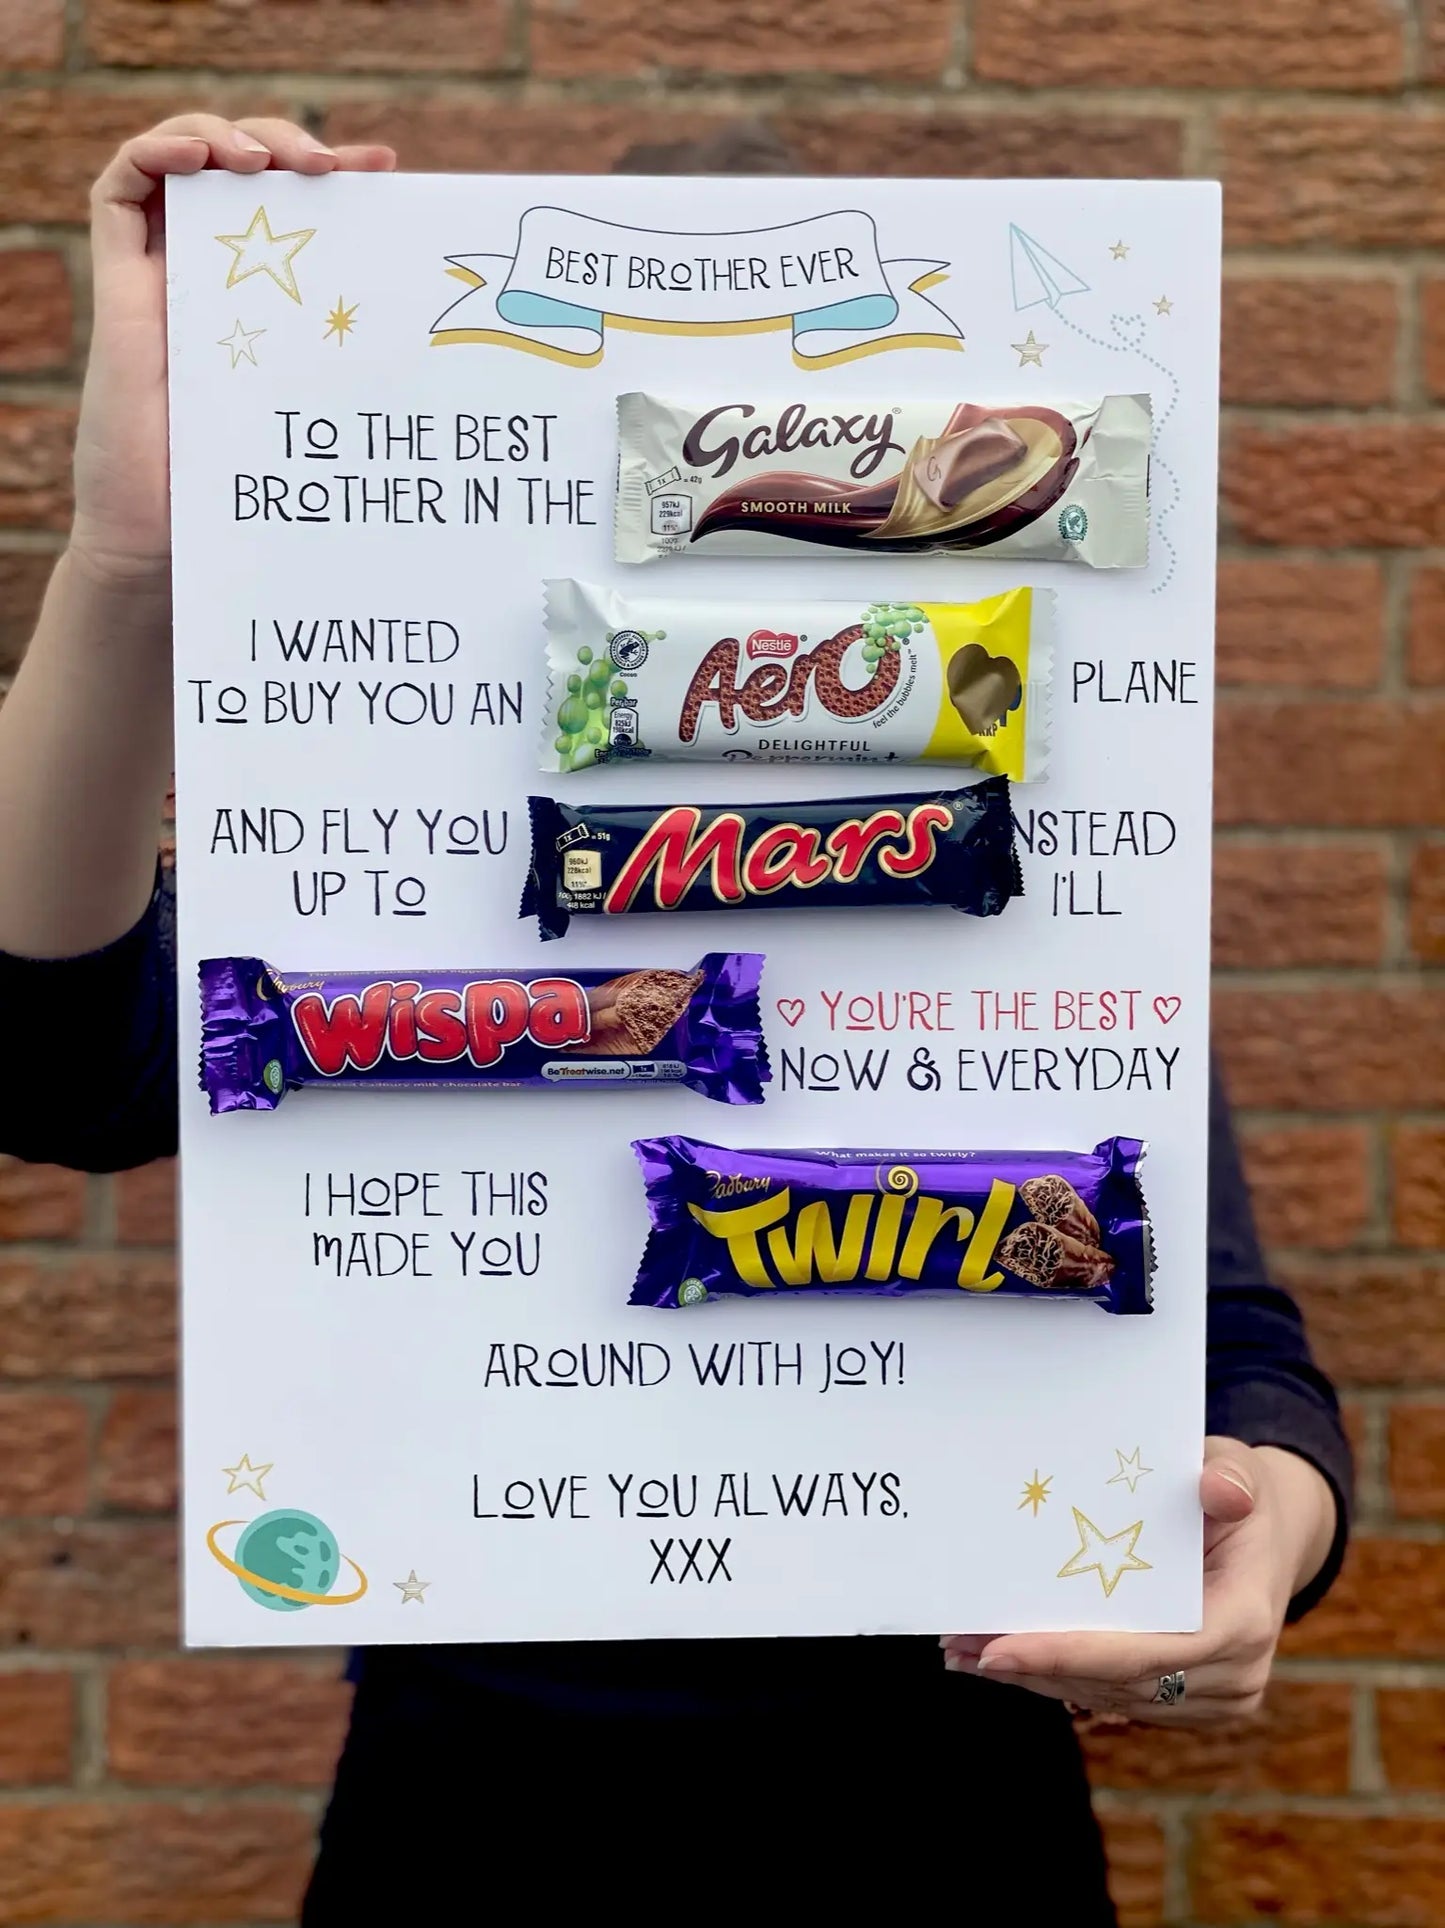 Best Brother Chocolate Message Board Gift La de da living faire